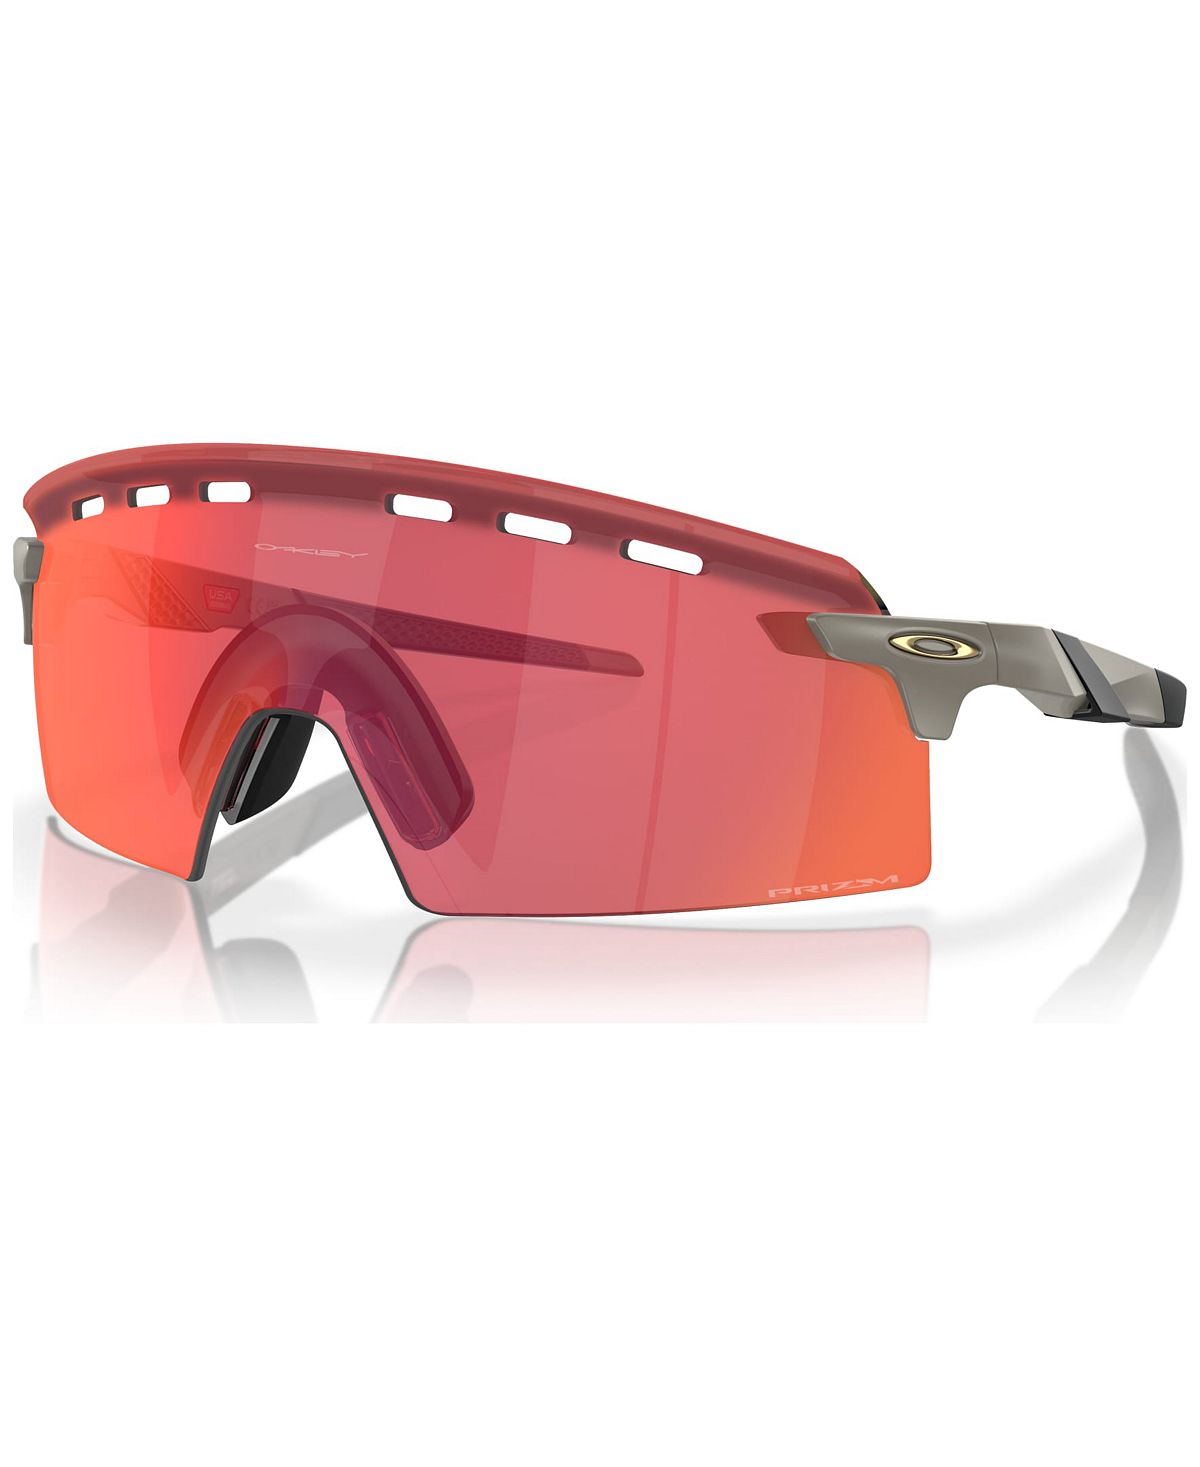 Мужские солнцезащитные очки Encoder Strike с вентиляцией, OO9235 Oakley